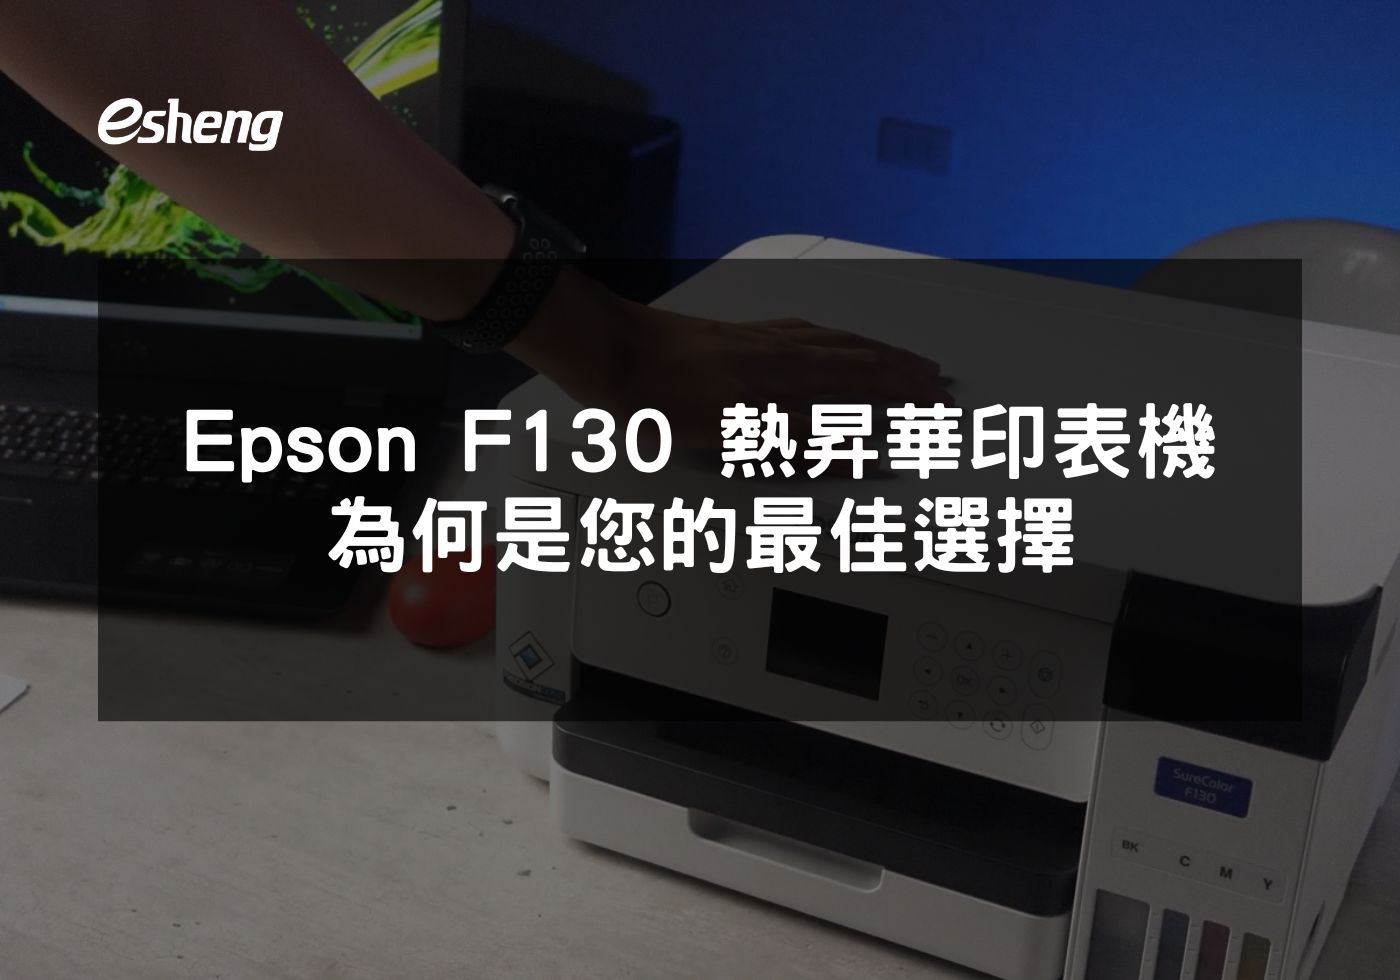 EPSON F130 熱昇華打印技術完全指南